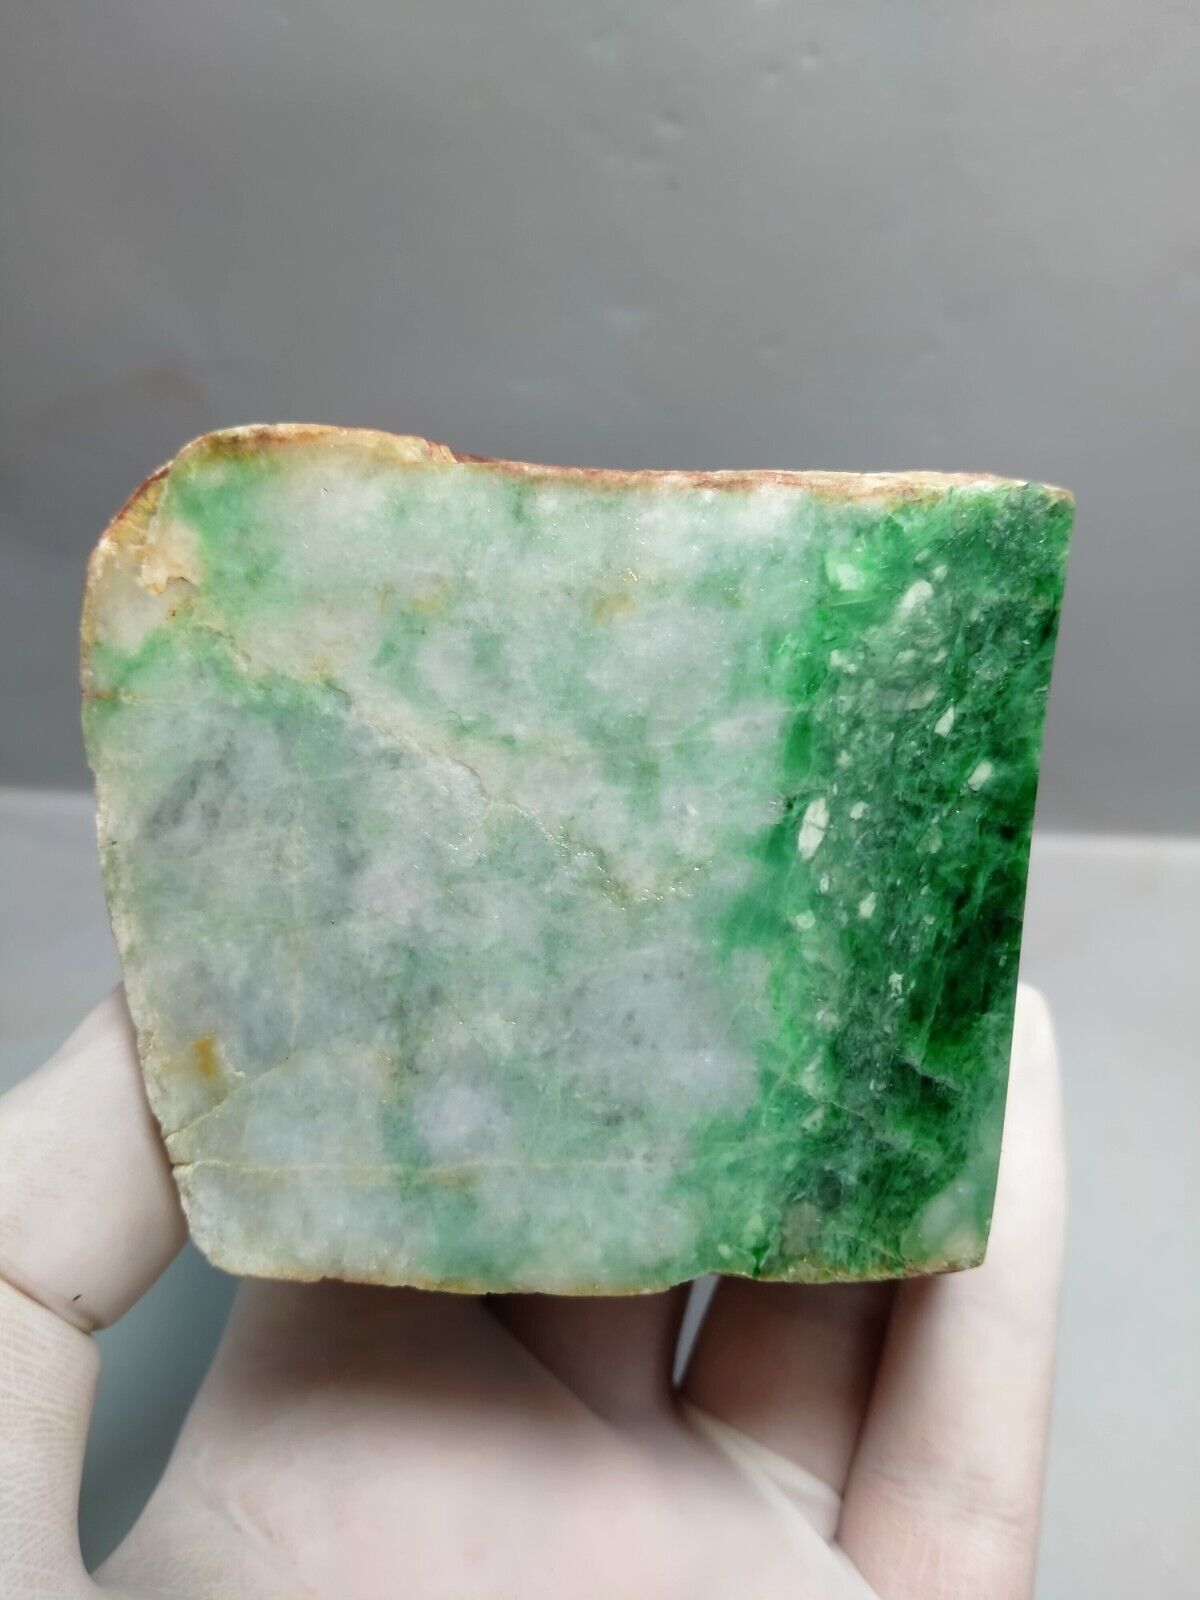 604grams Jadeite Jade Rough Cut 100% Real Natural Burmese Burma Jade Specimen